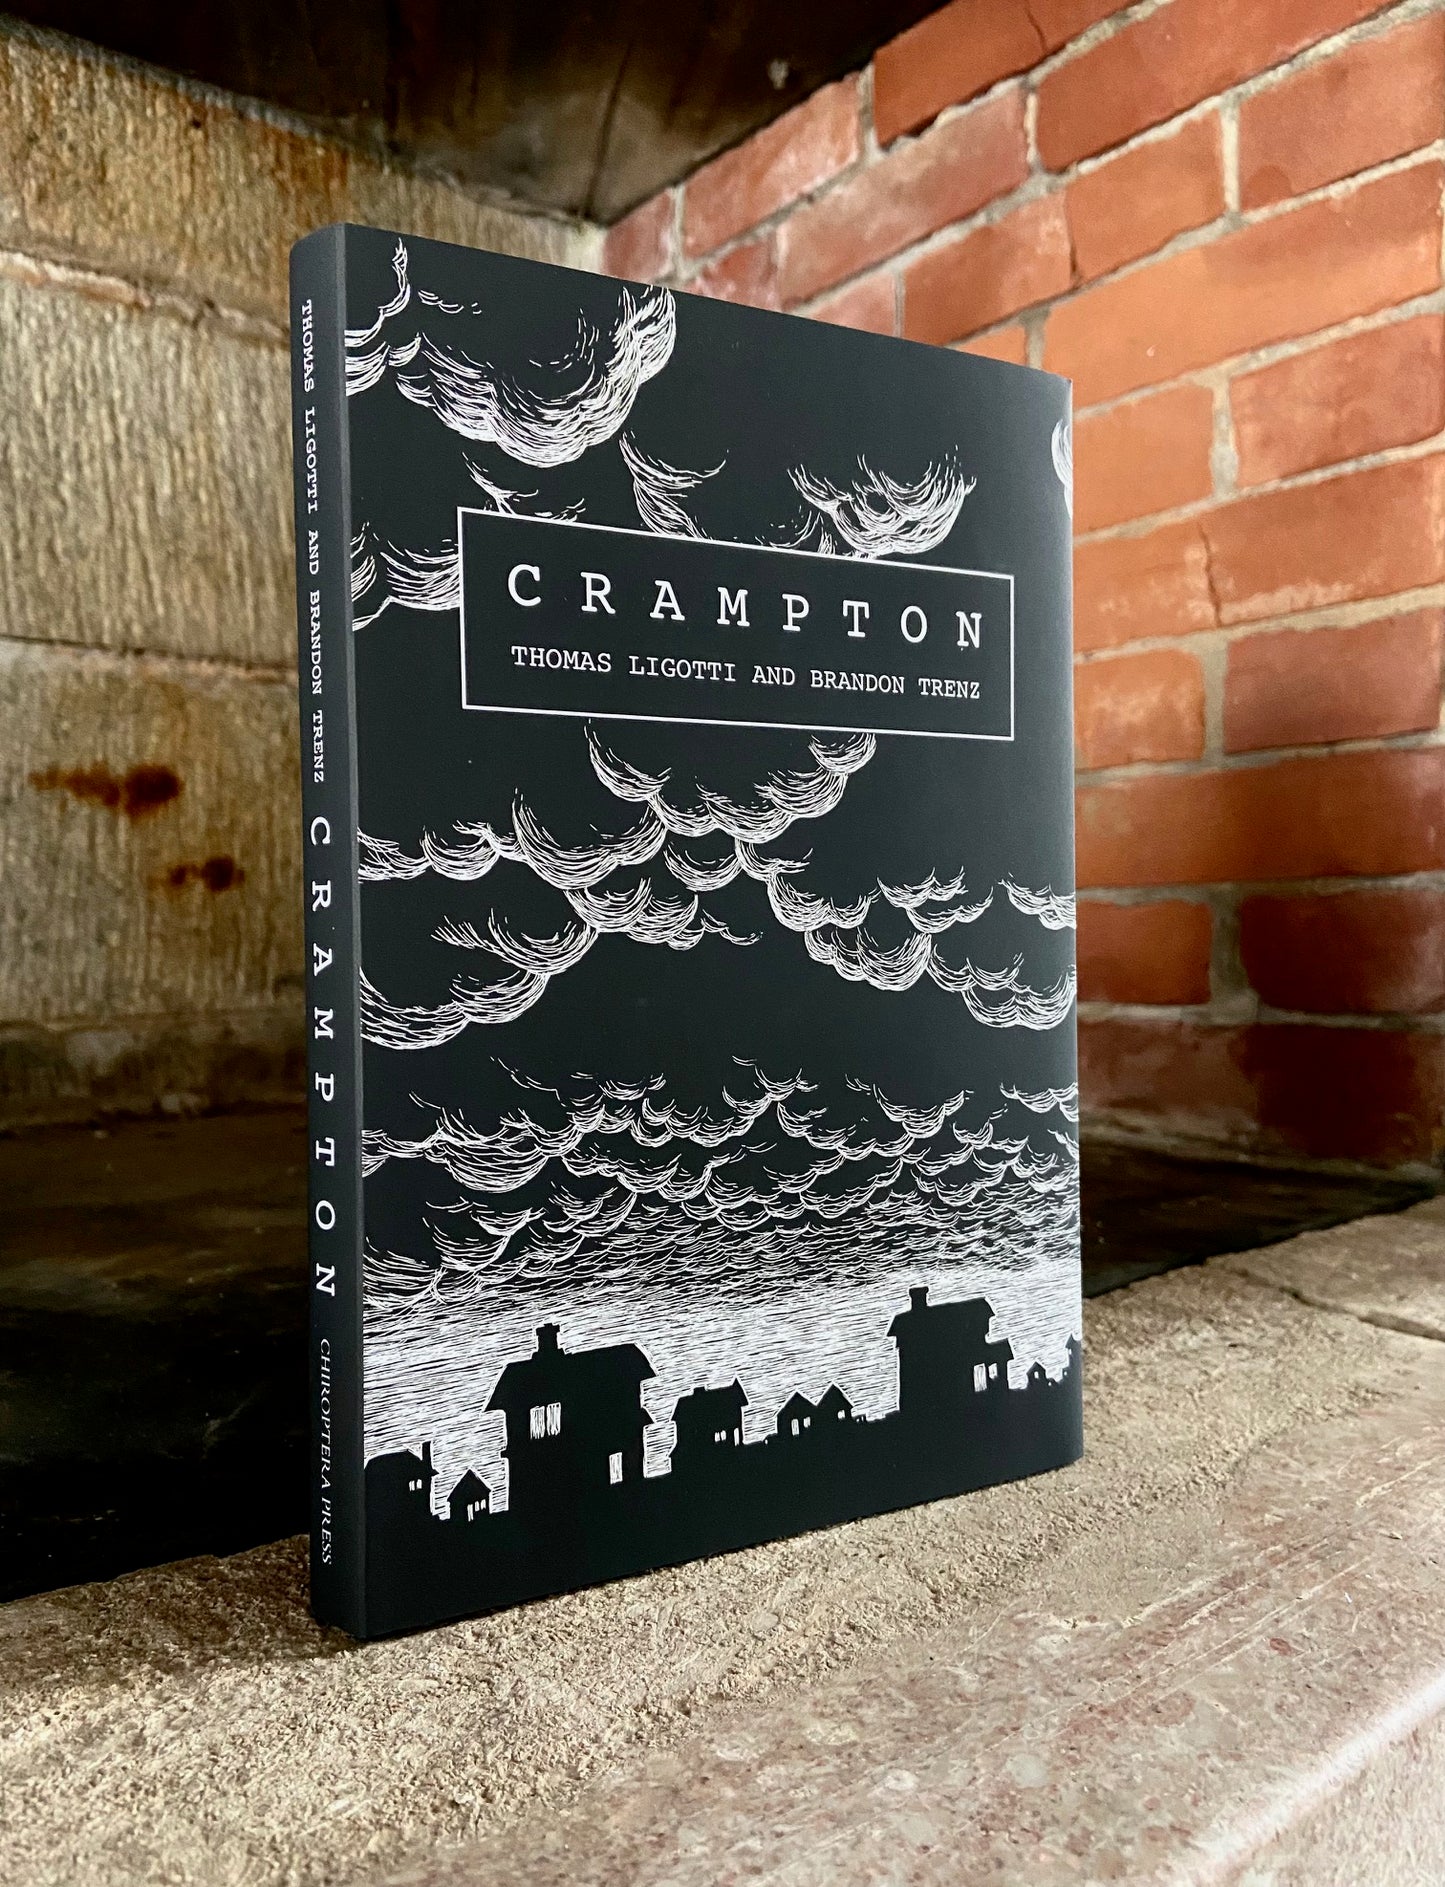 Crampton by Thomas Ligotti and Brandon Trenz - Hardcover edition